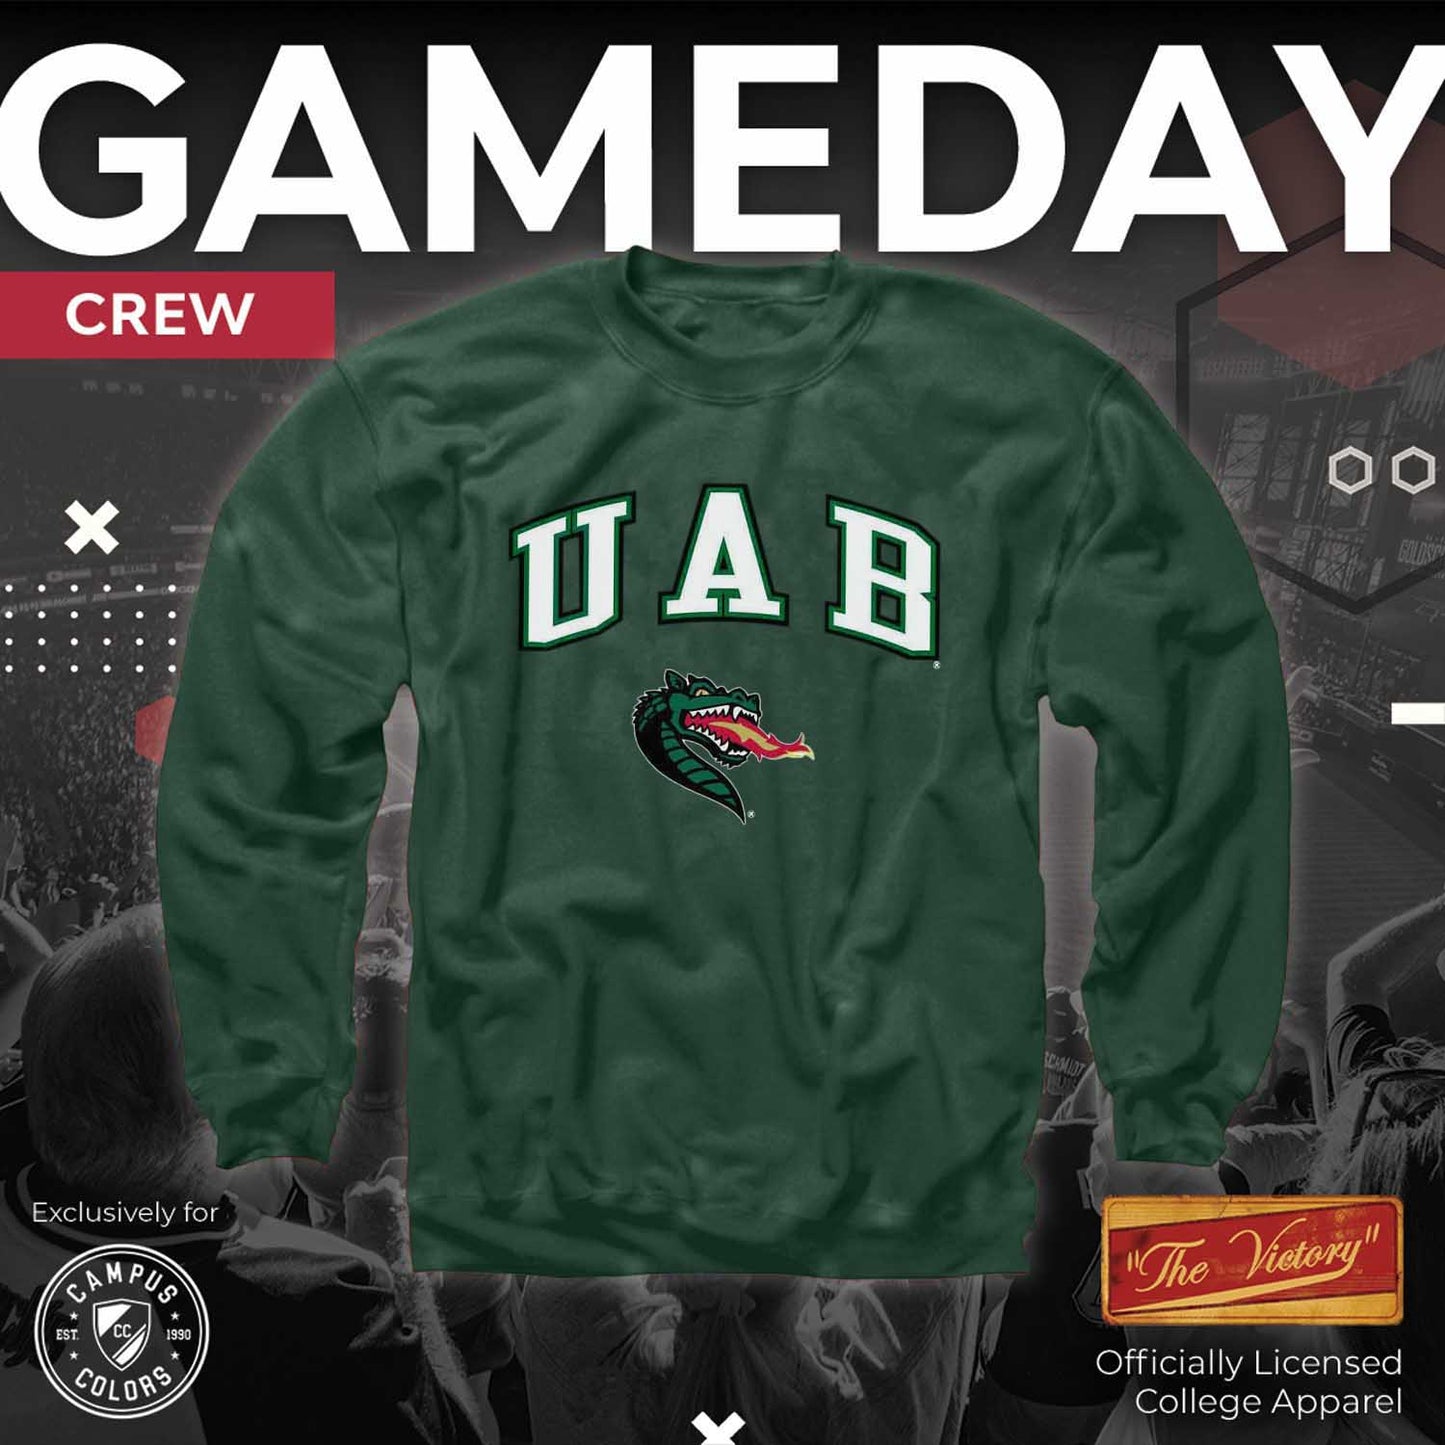 UAB Blazers Adult Arch & Logo Soft Style Gameday Crewneck Sweatshirt - Green